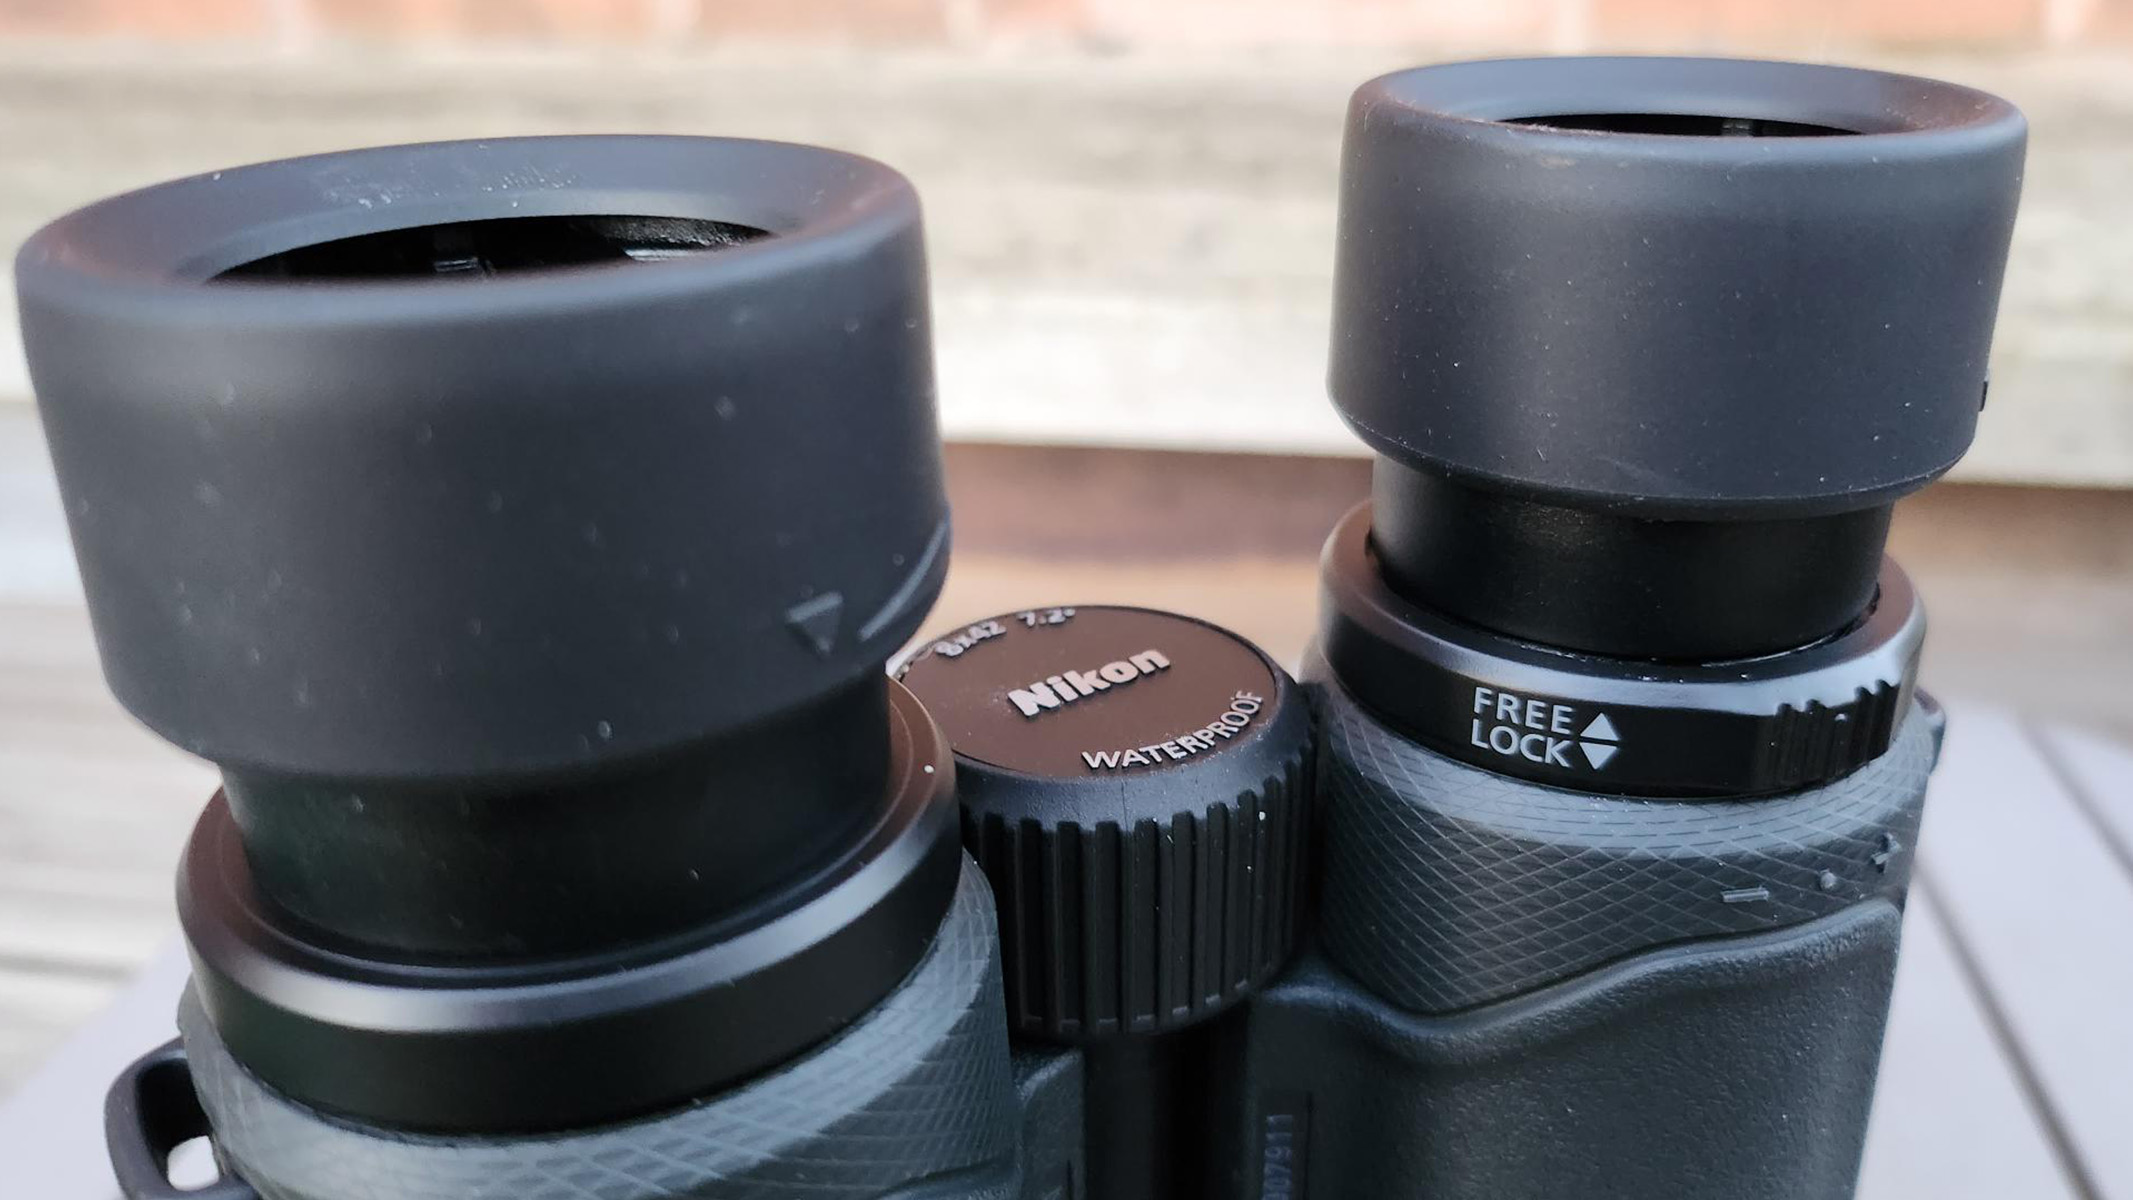 A close up of the eyecups of binoculars